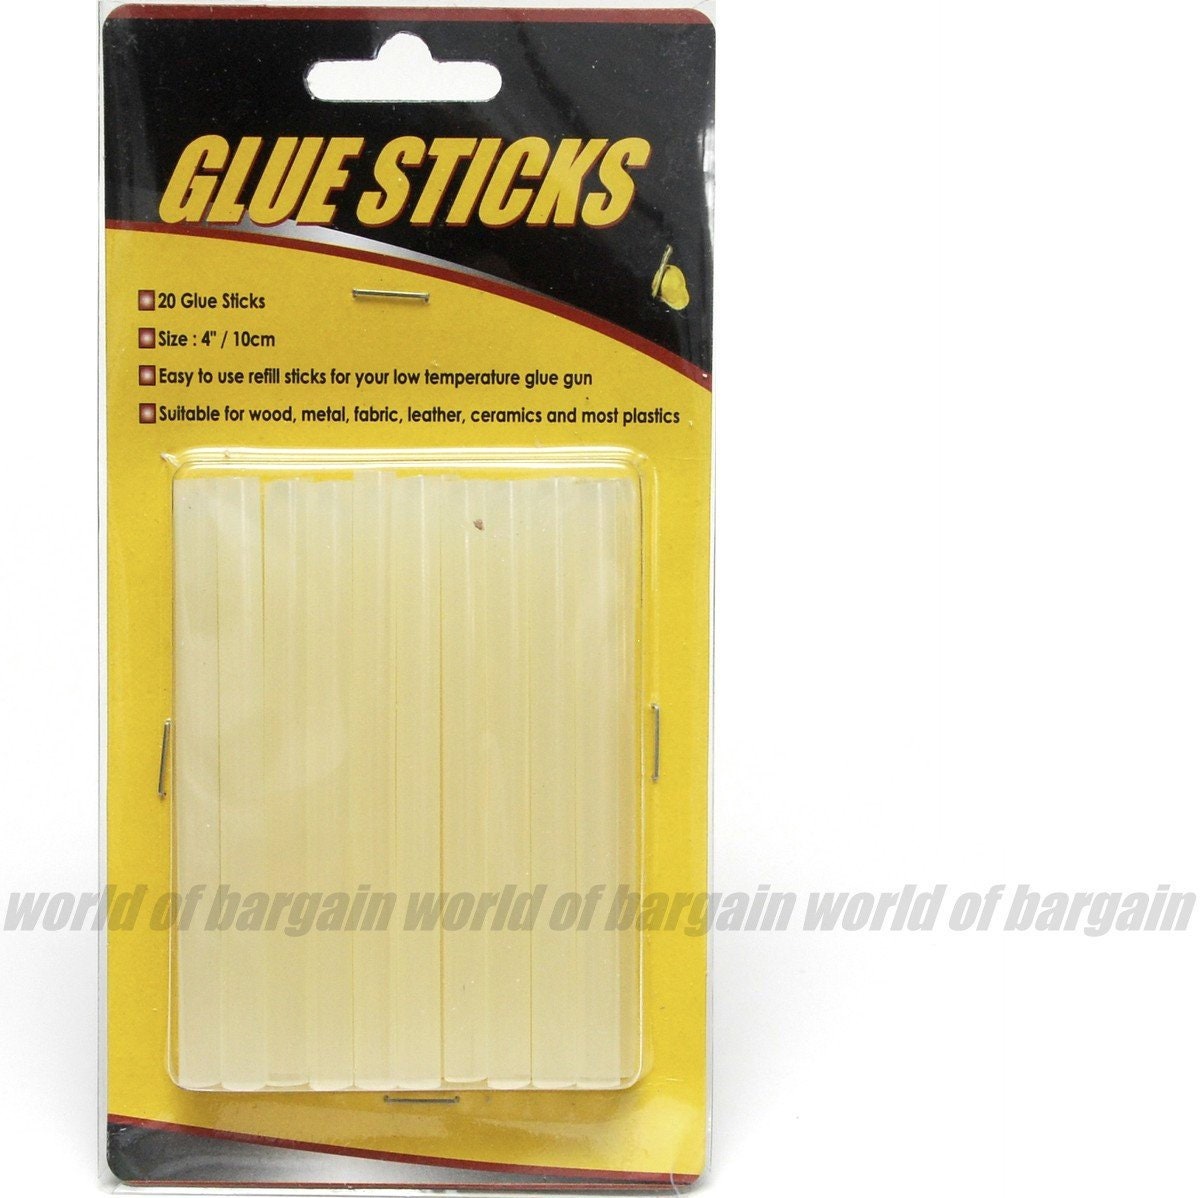 20 Ct GLUE STICKS for Glue Gun 10cm X 4 Inch Long Hot Melt